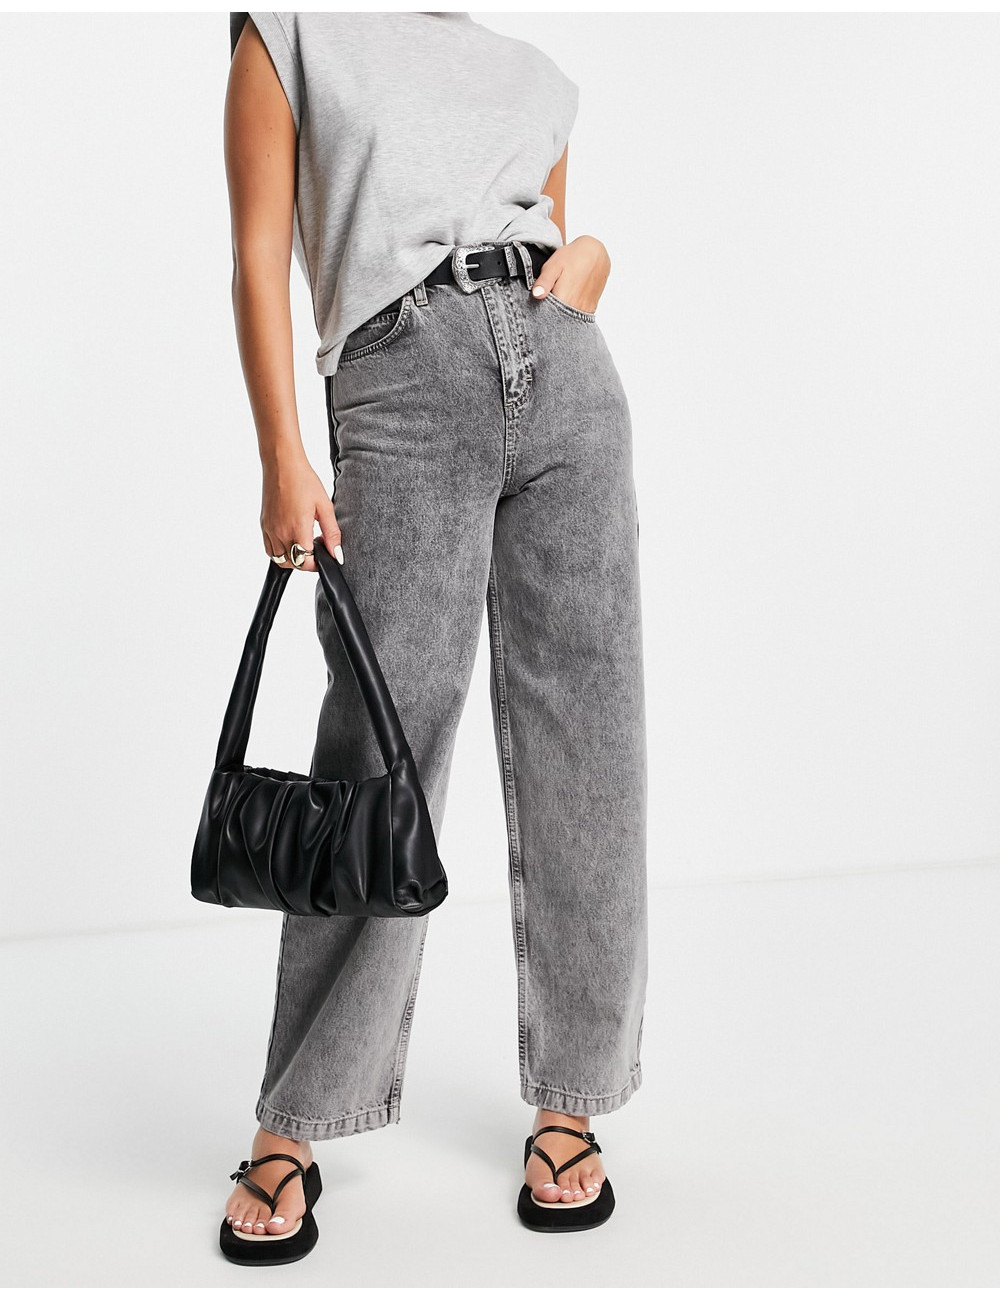 Topshop baggy jeans in grey